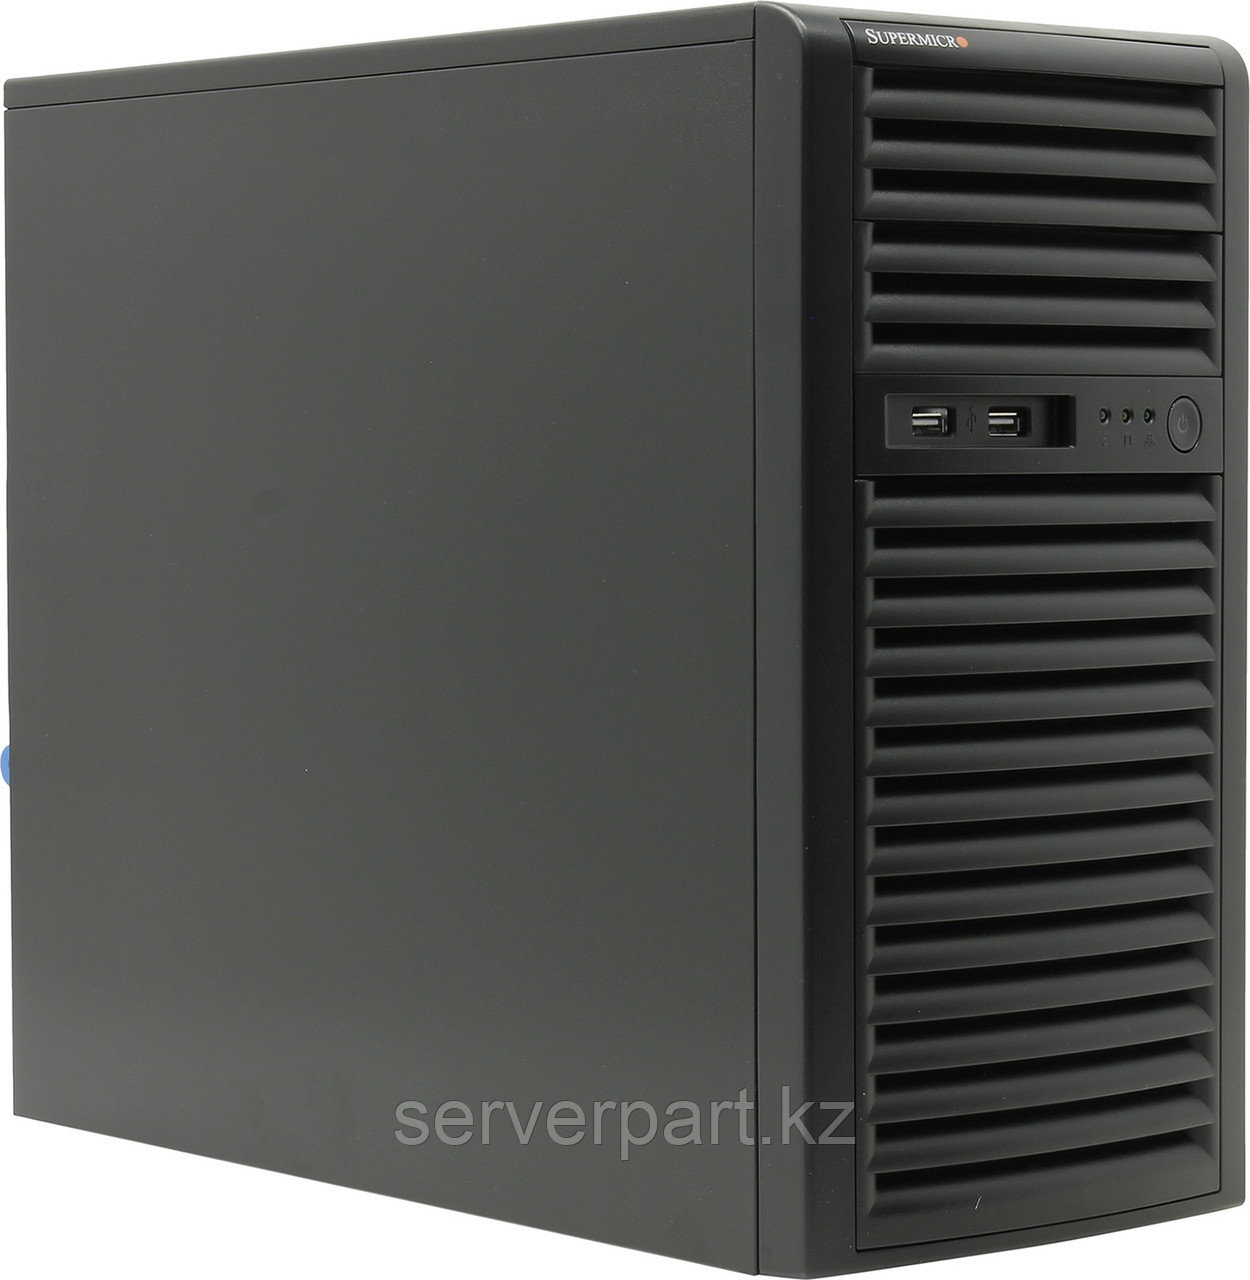 Сервер Supermicro SYS-5039D Tower/4-core intel xeon E3-1220v6 3GHz/64GB EUDIMM/1x240GB SSD MU Hyb